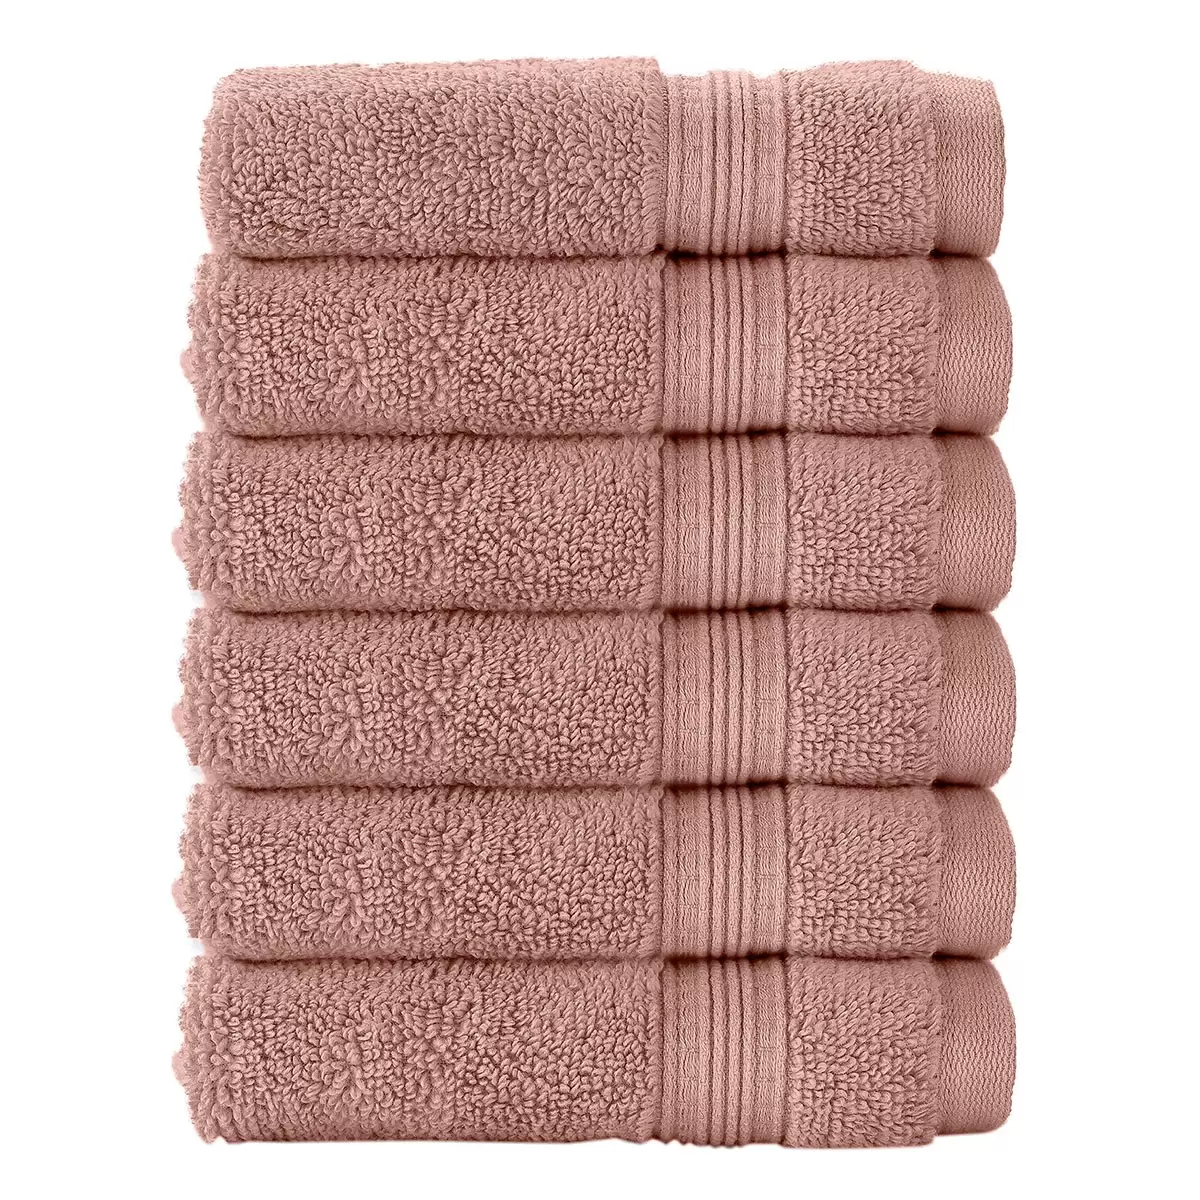 Grandeur 印度低捻純棉方巾六入組 33公分 X 33 公分 粉色